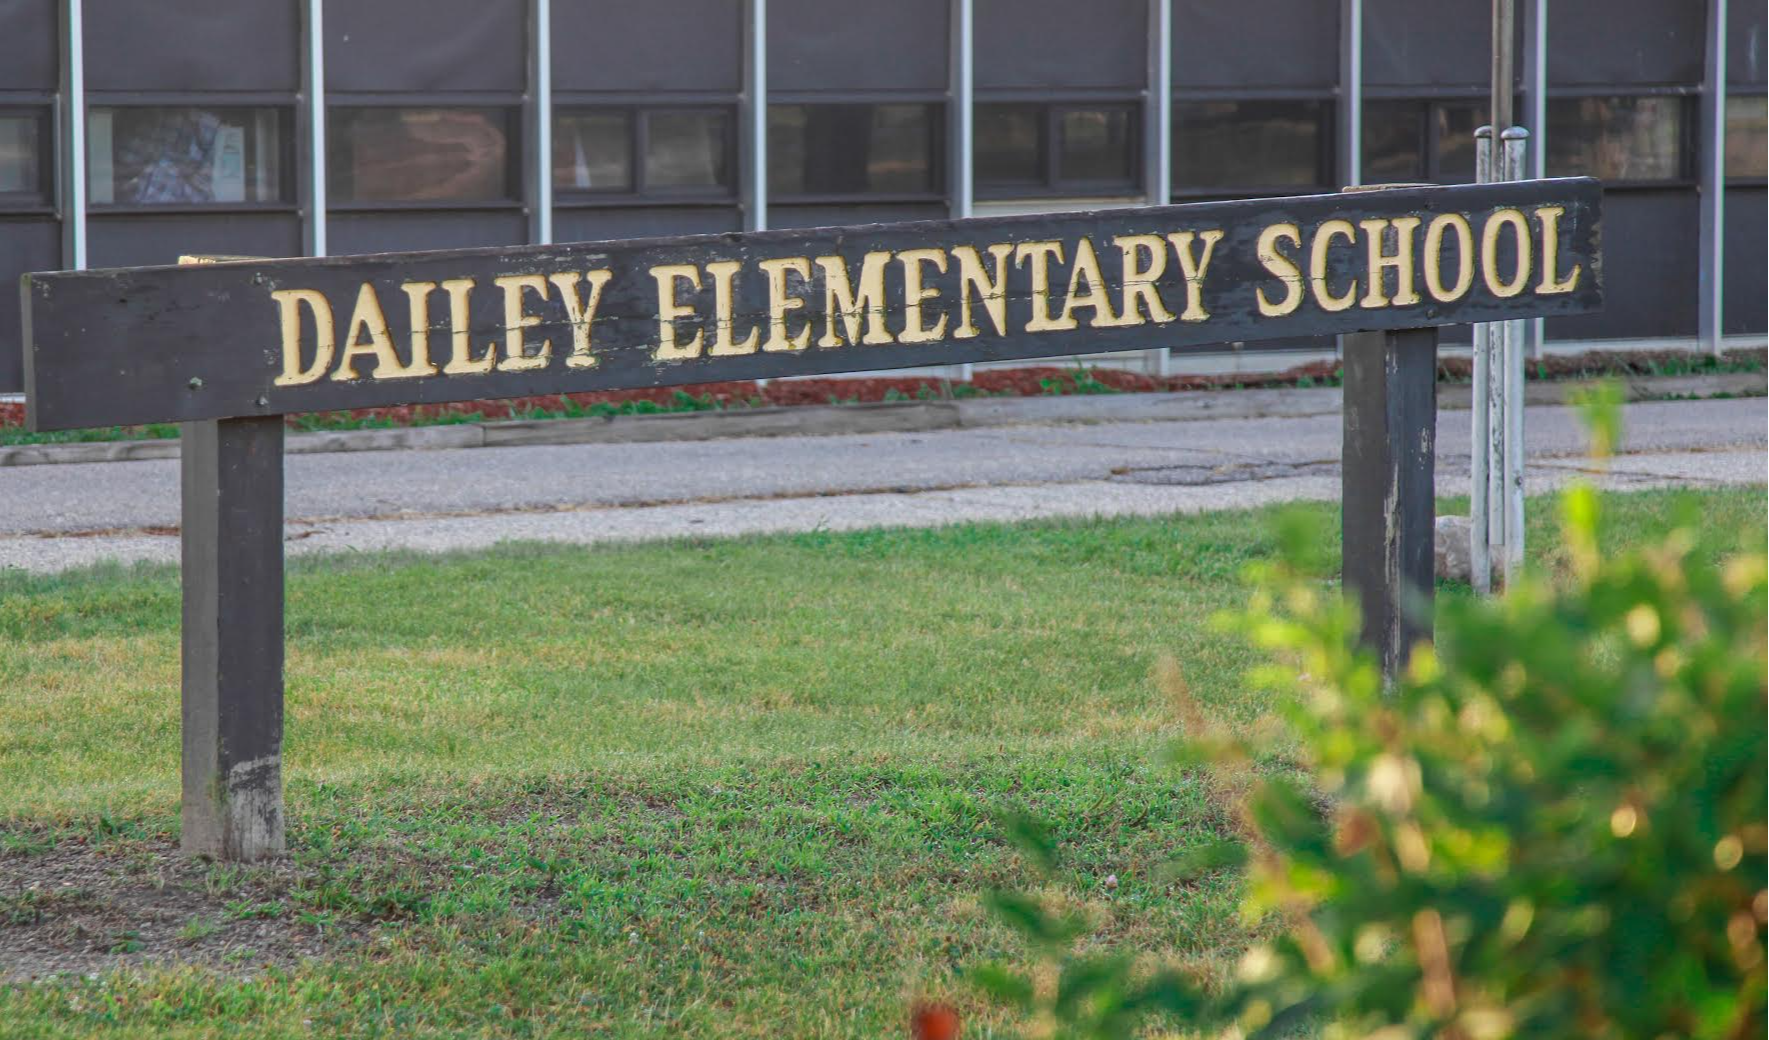 Dailey elementary